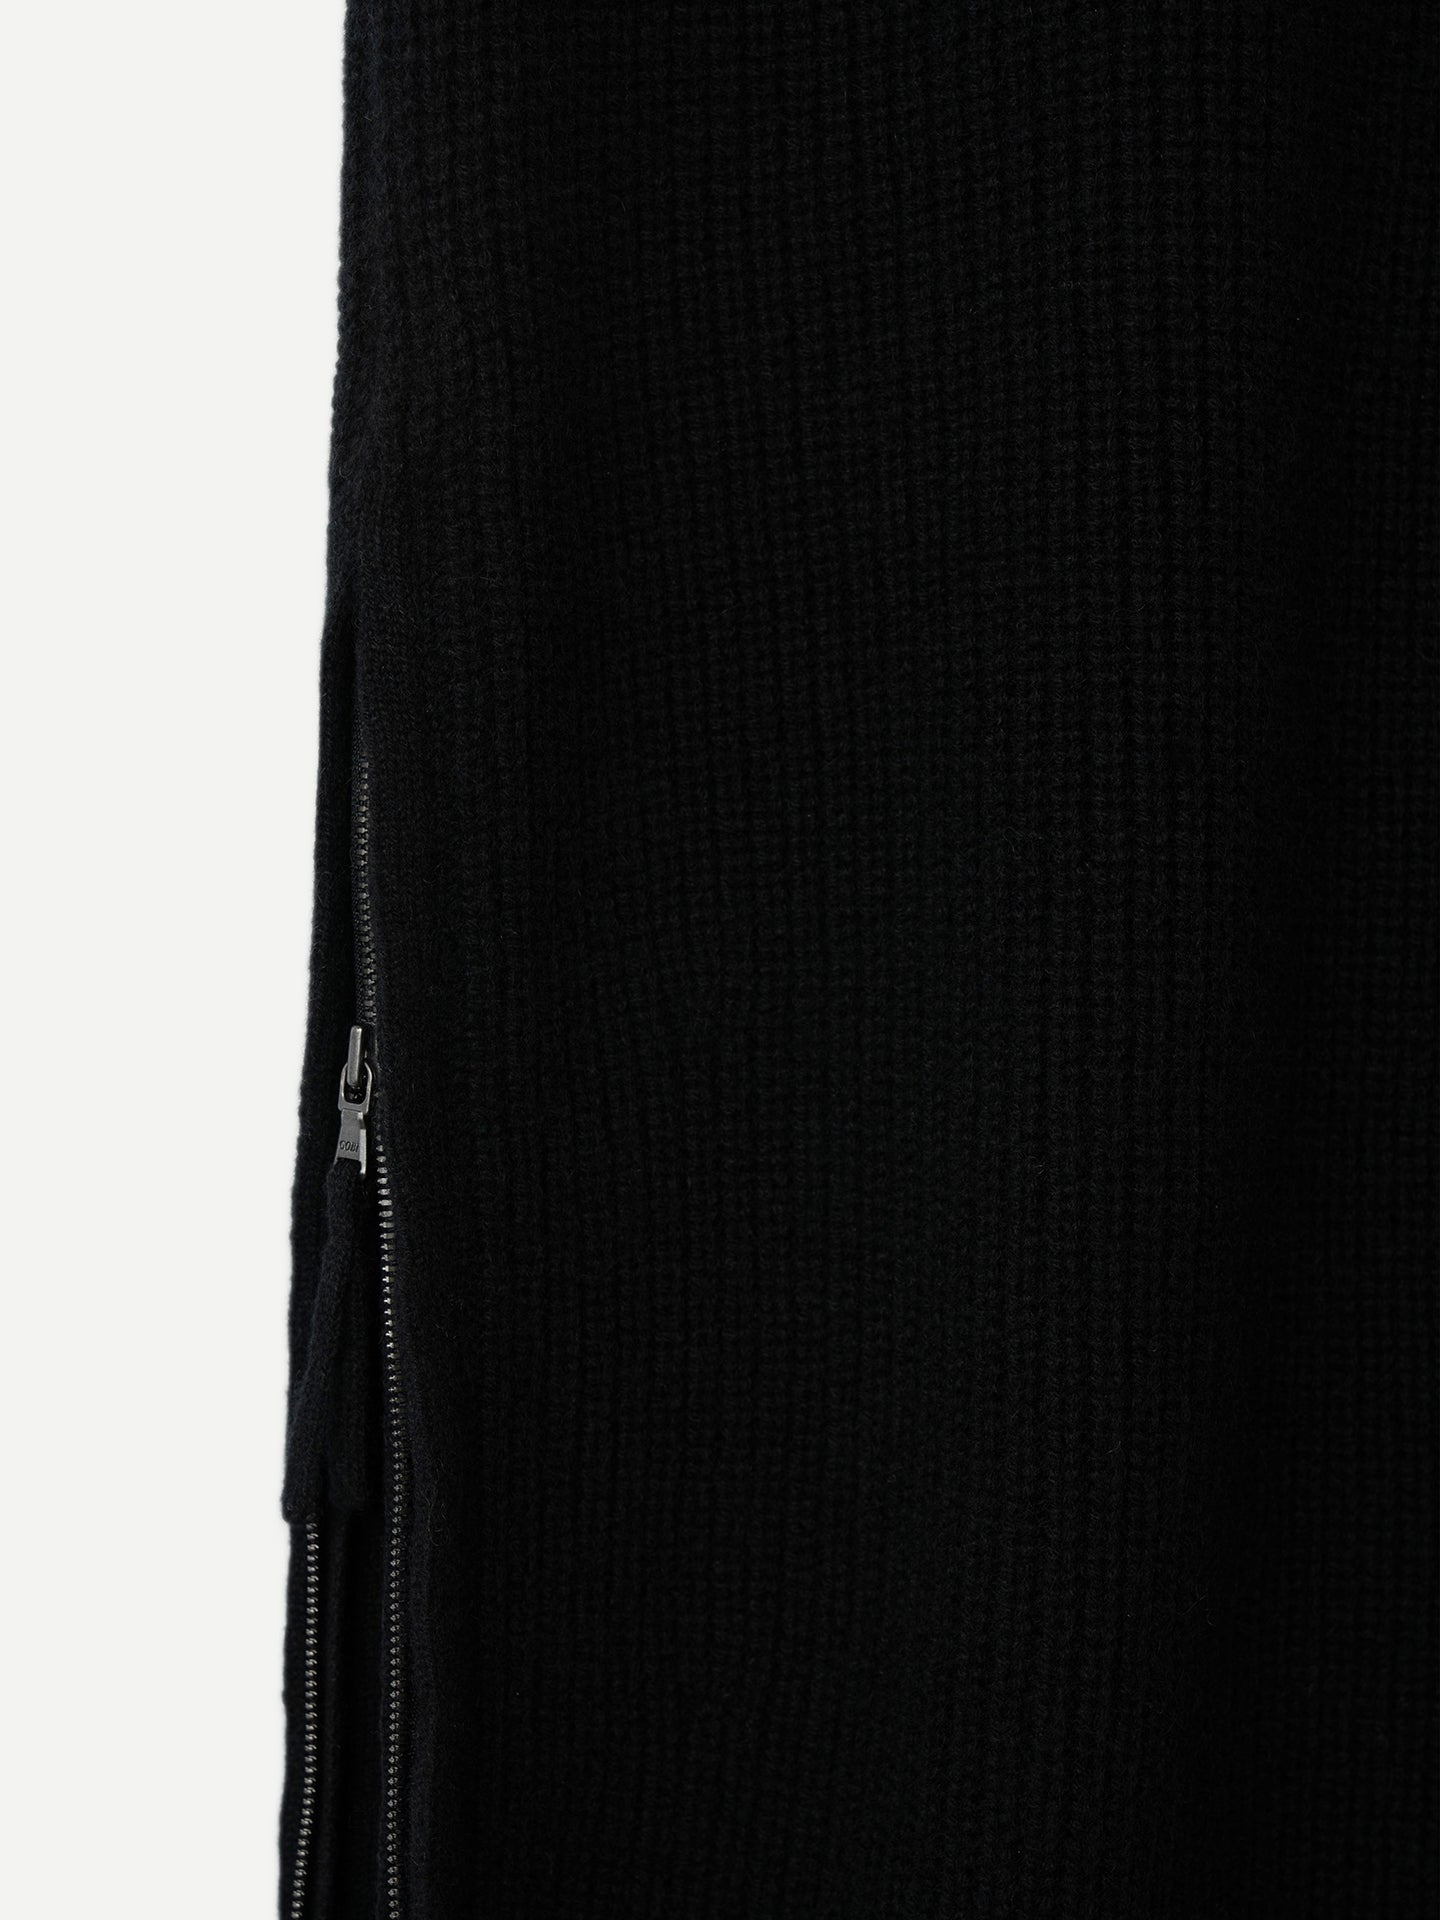 Women's Cashmere Skirt with Zip Black - Gobi Cashmere